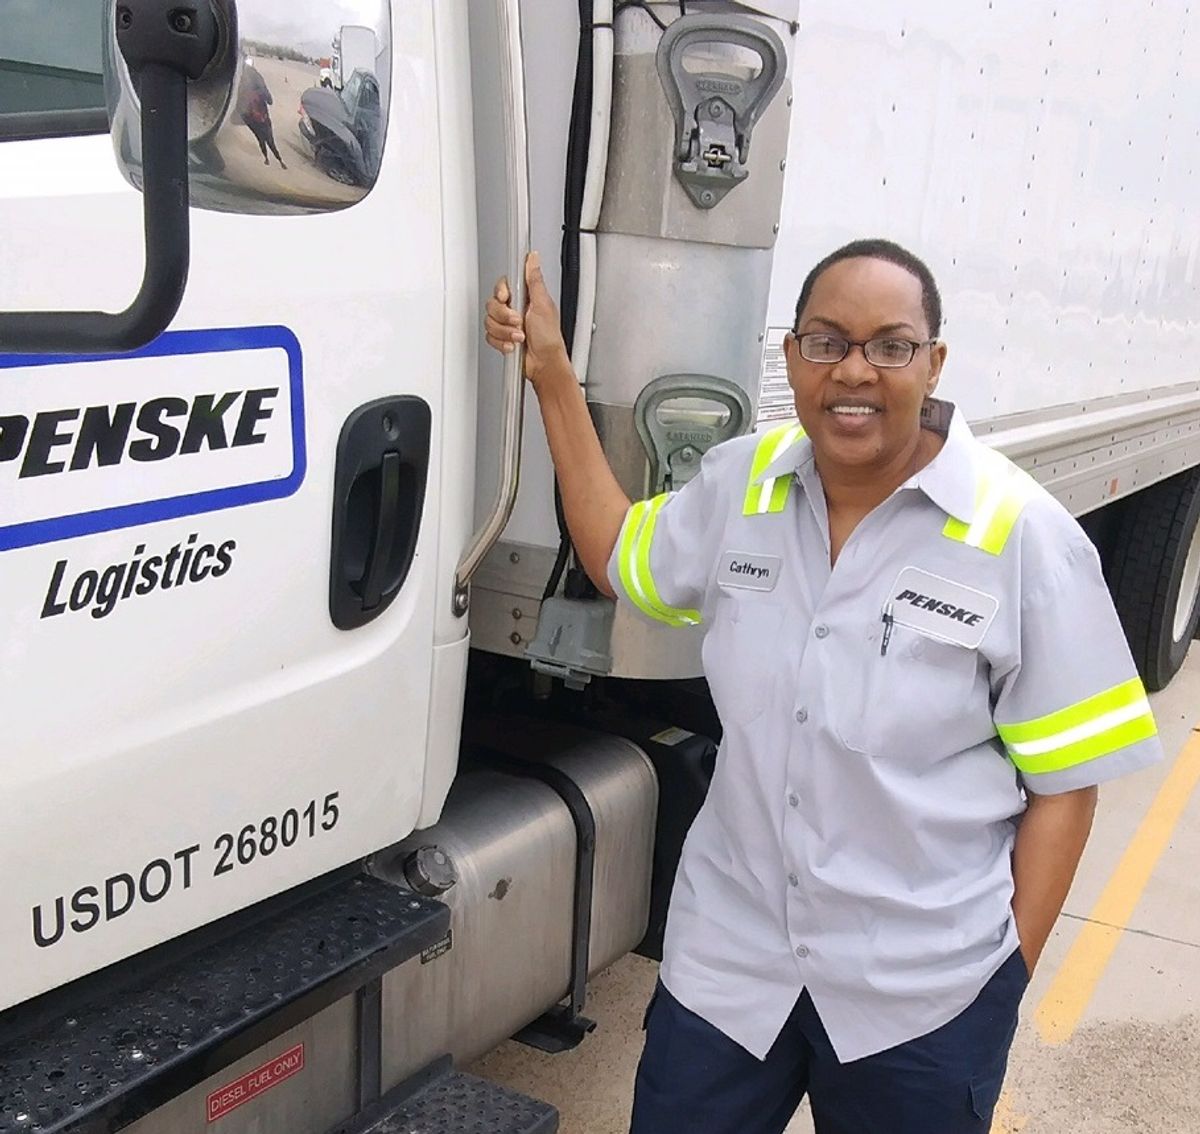 Penske Professional Truck Driver Charts Path to Rewarding Career